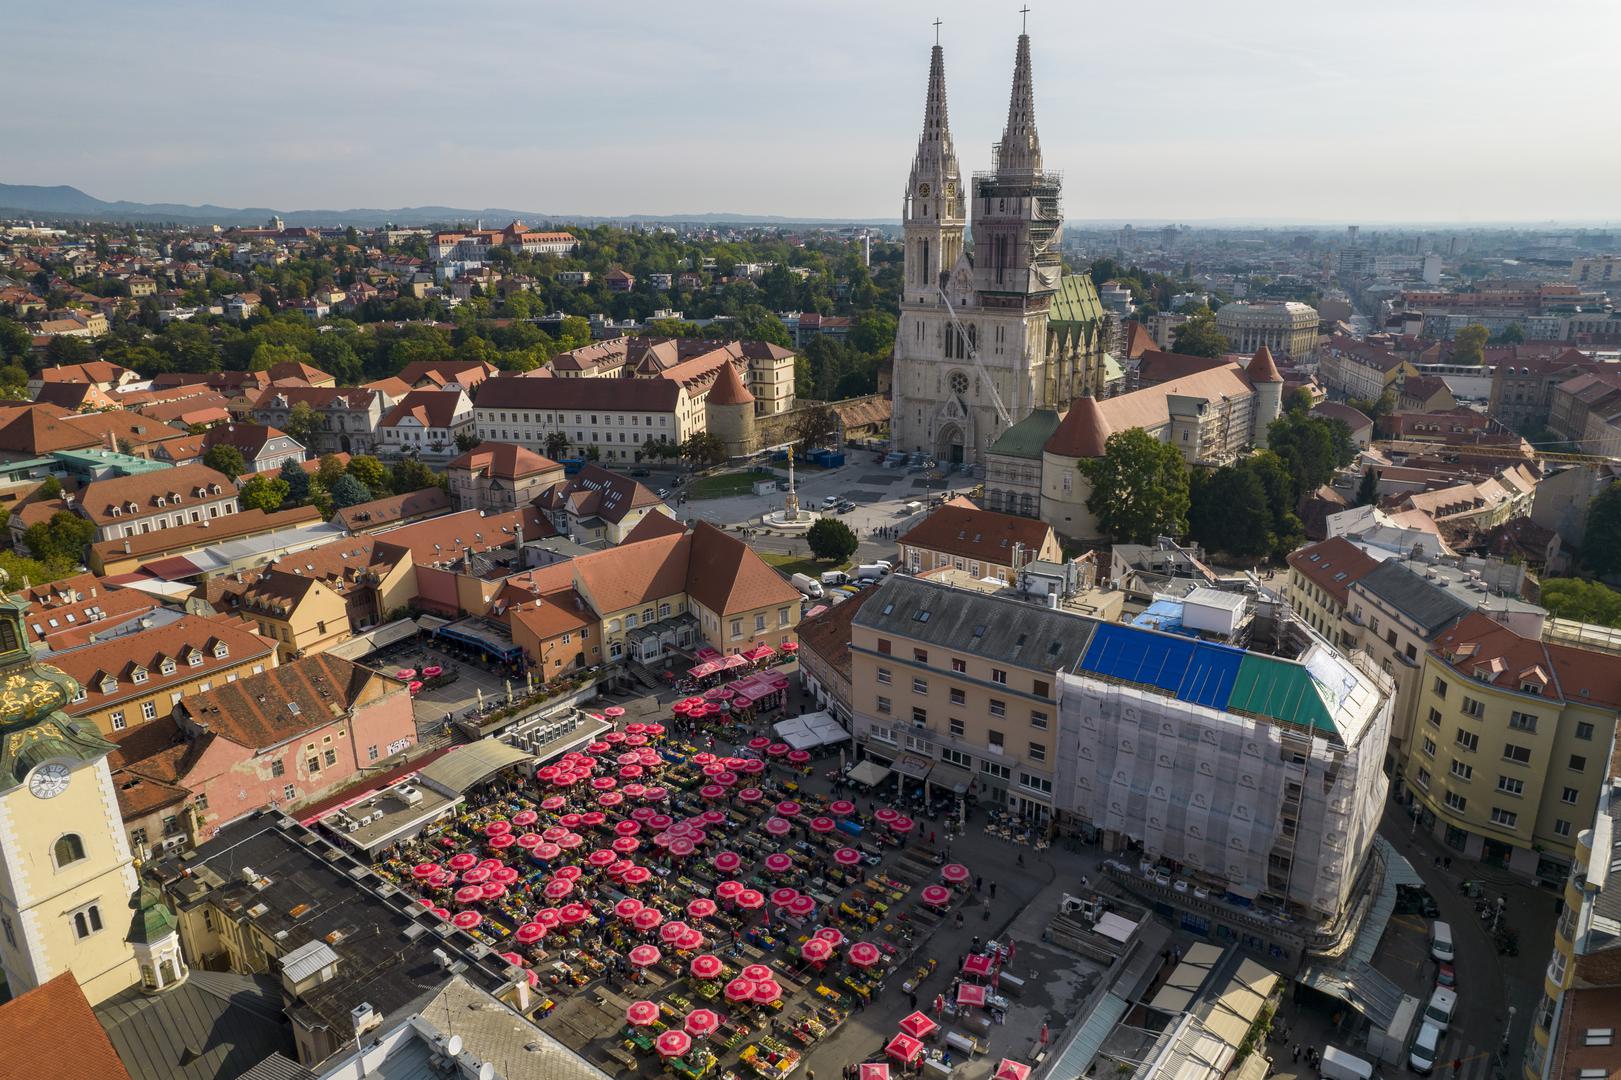 28. Zagrebačka katedrala: Ukupno mentiona: 18,896; Prošlogodišnji poredak: 26 (↓2)